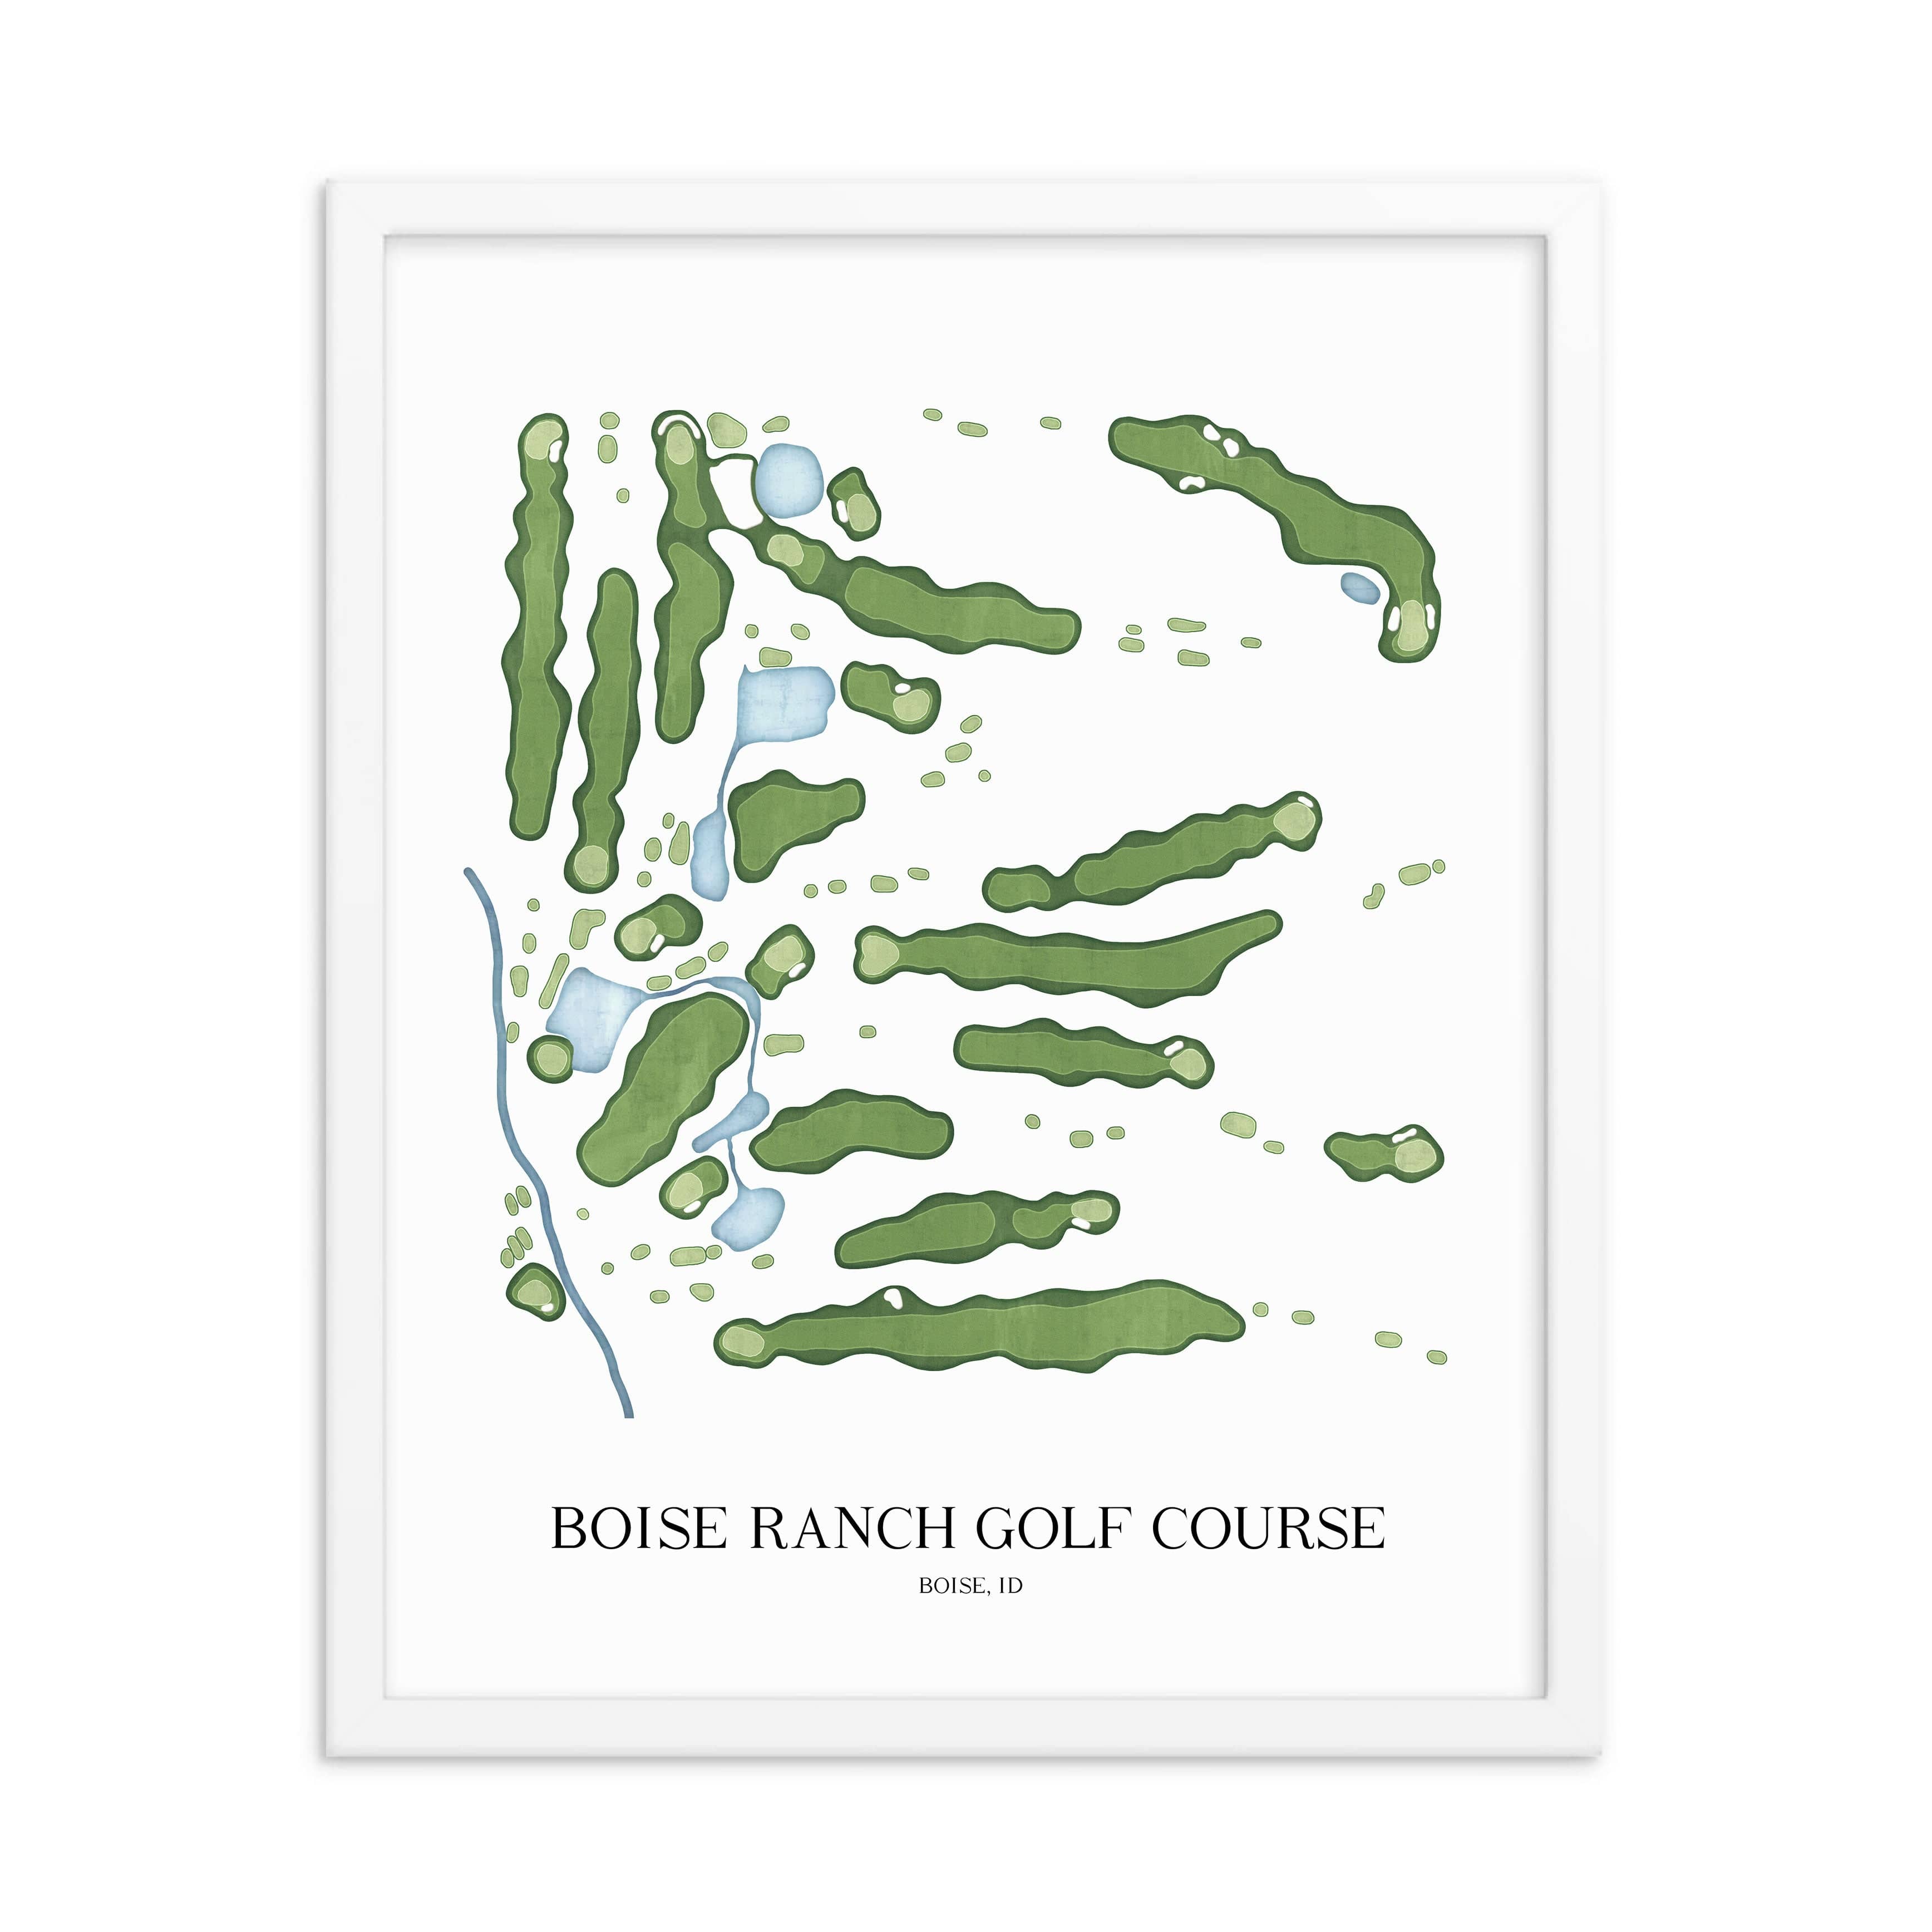 The 19th Hole Golf Shop - Golf Course Prints -  Boise Ranch Golf Course Golf Course Map